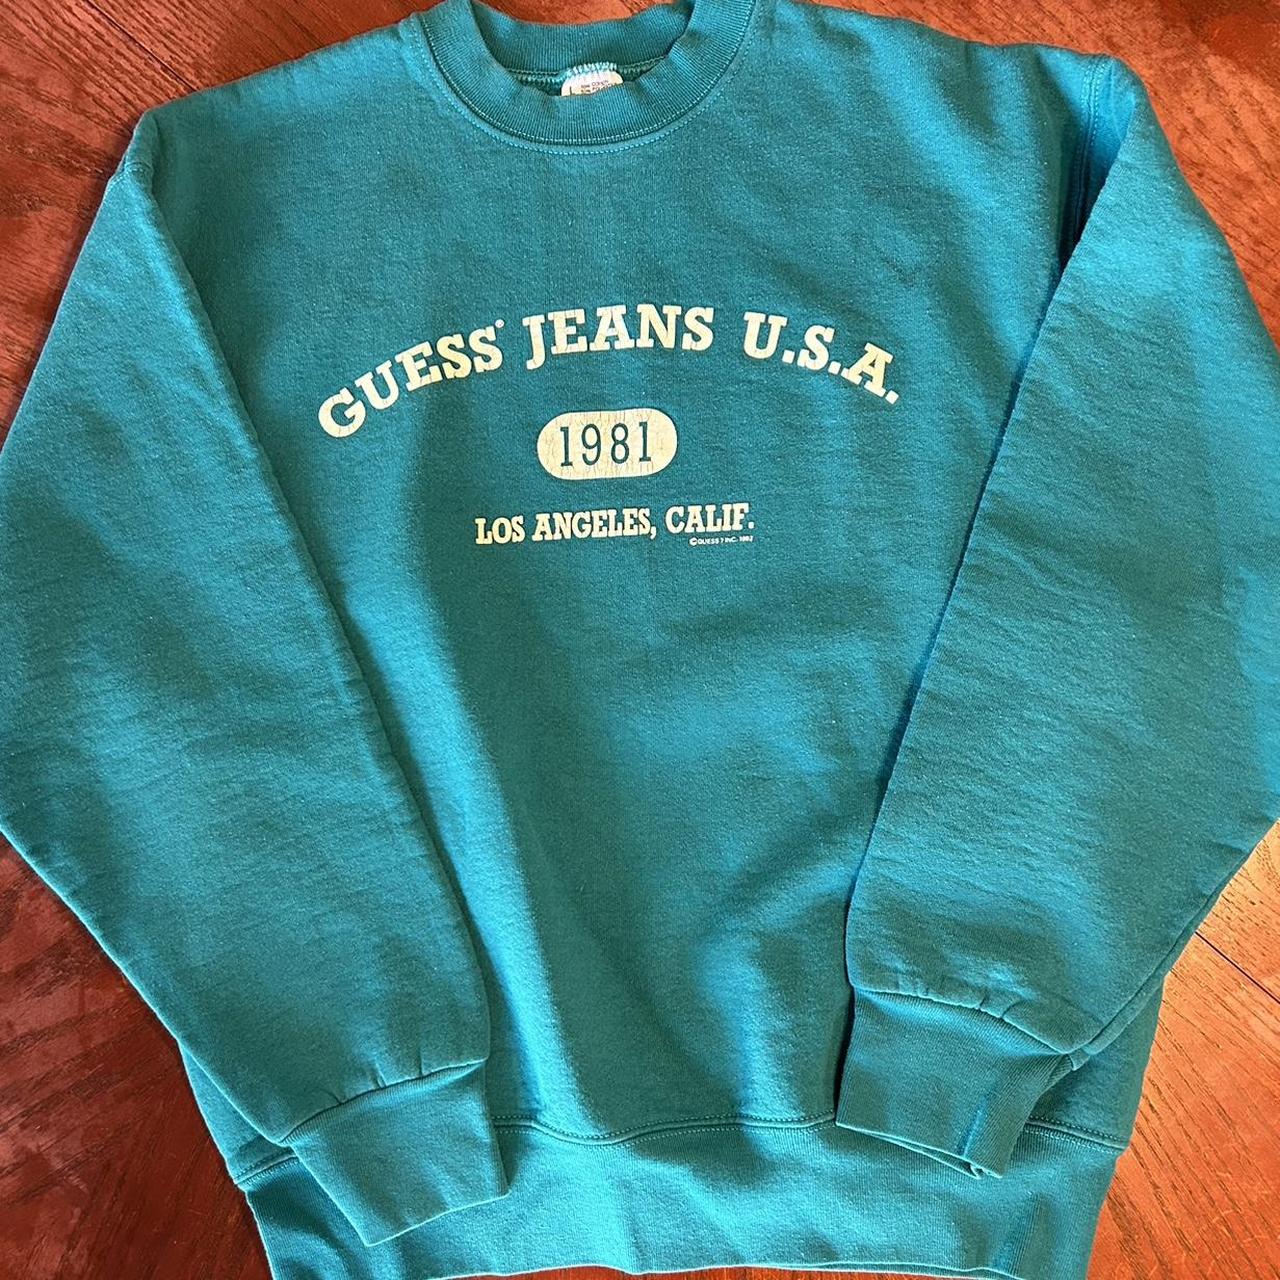 Guess Jeans USA True Vintage Teal Crewneck Minor... - Depop